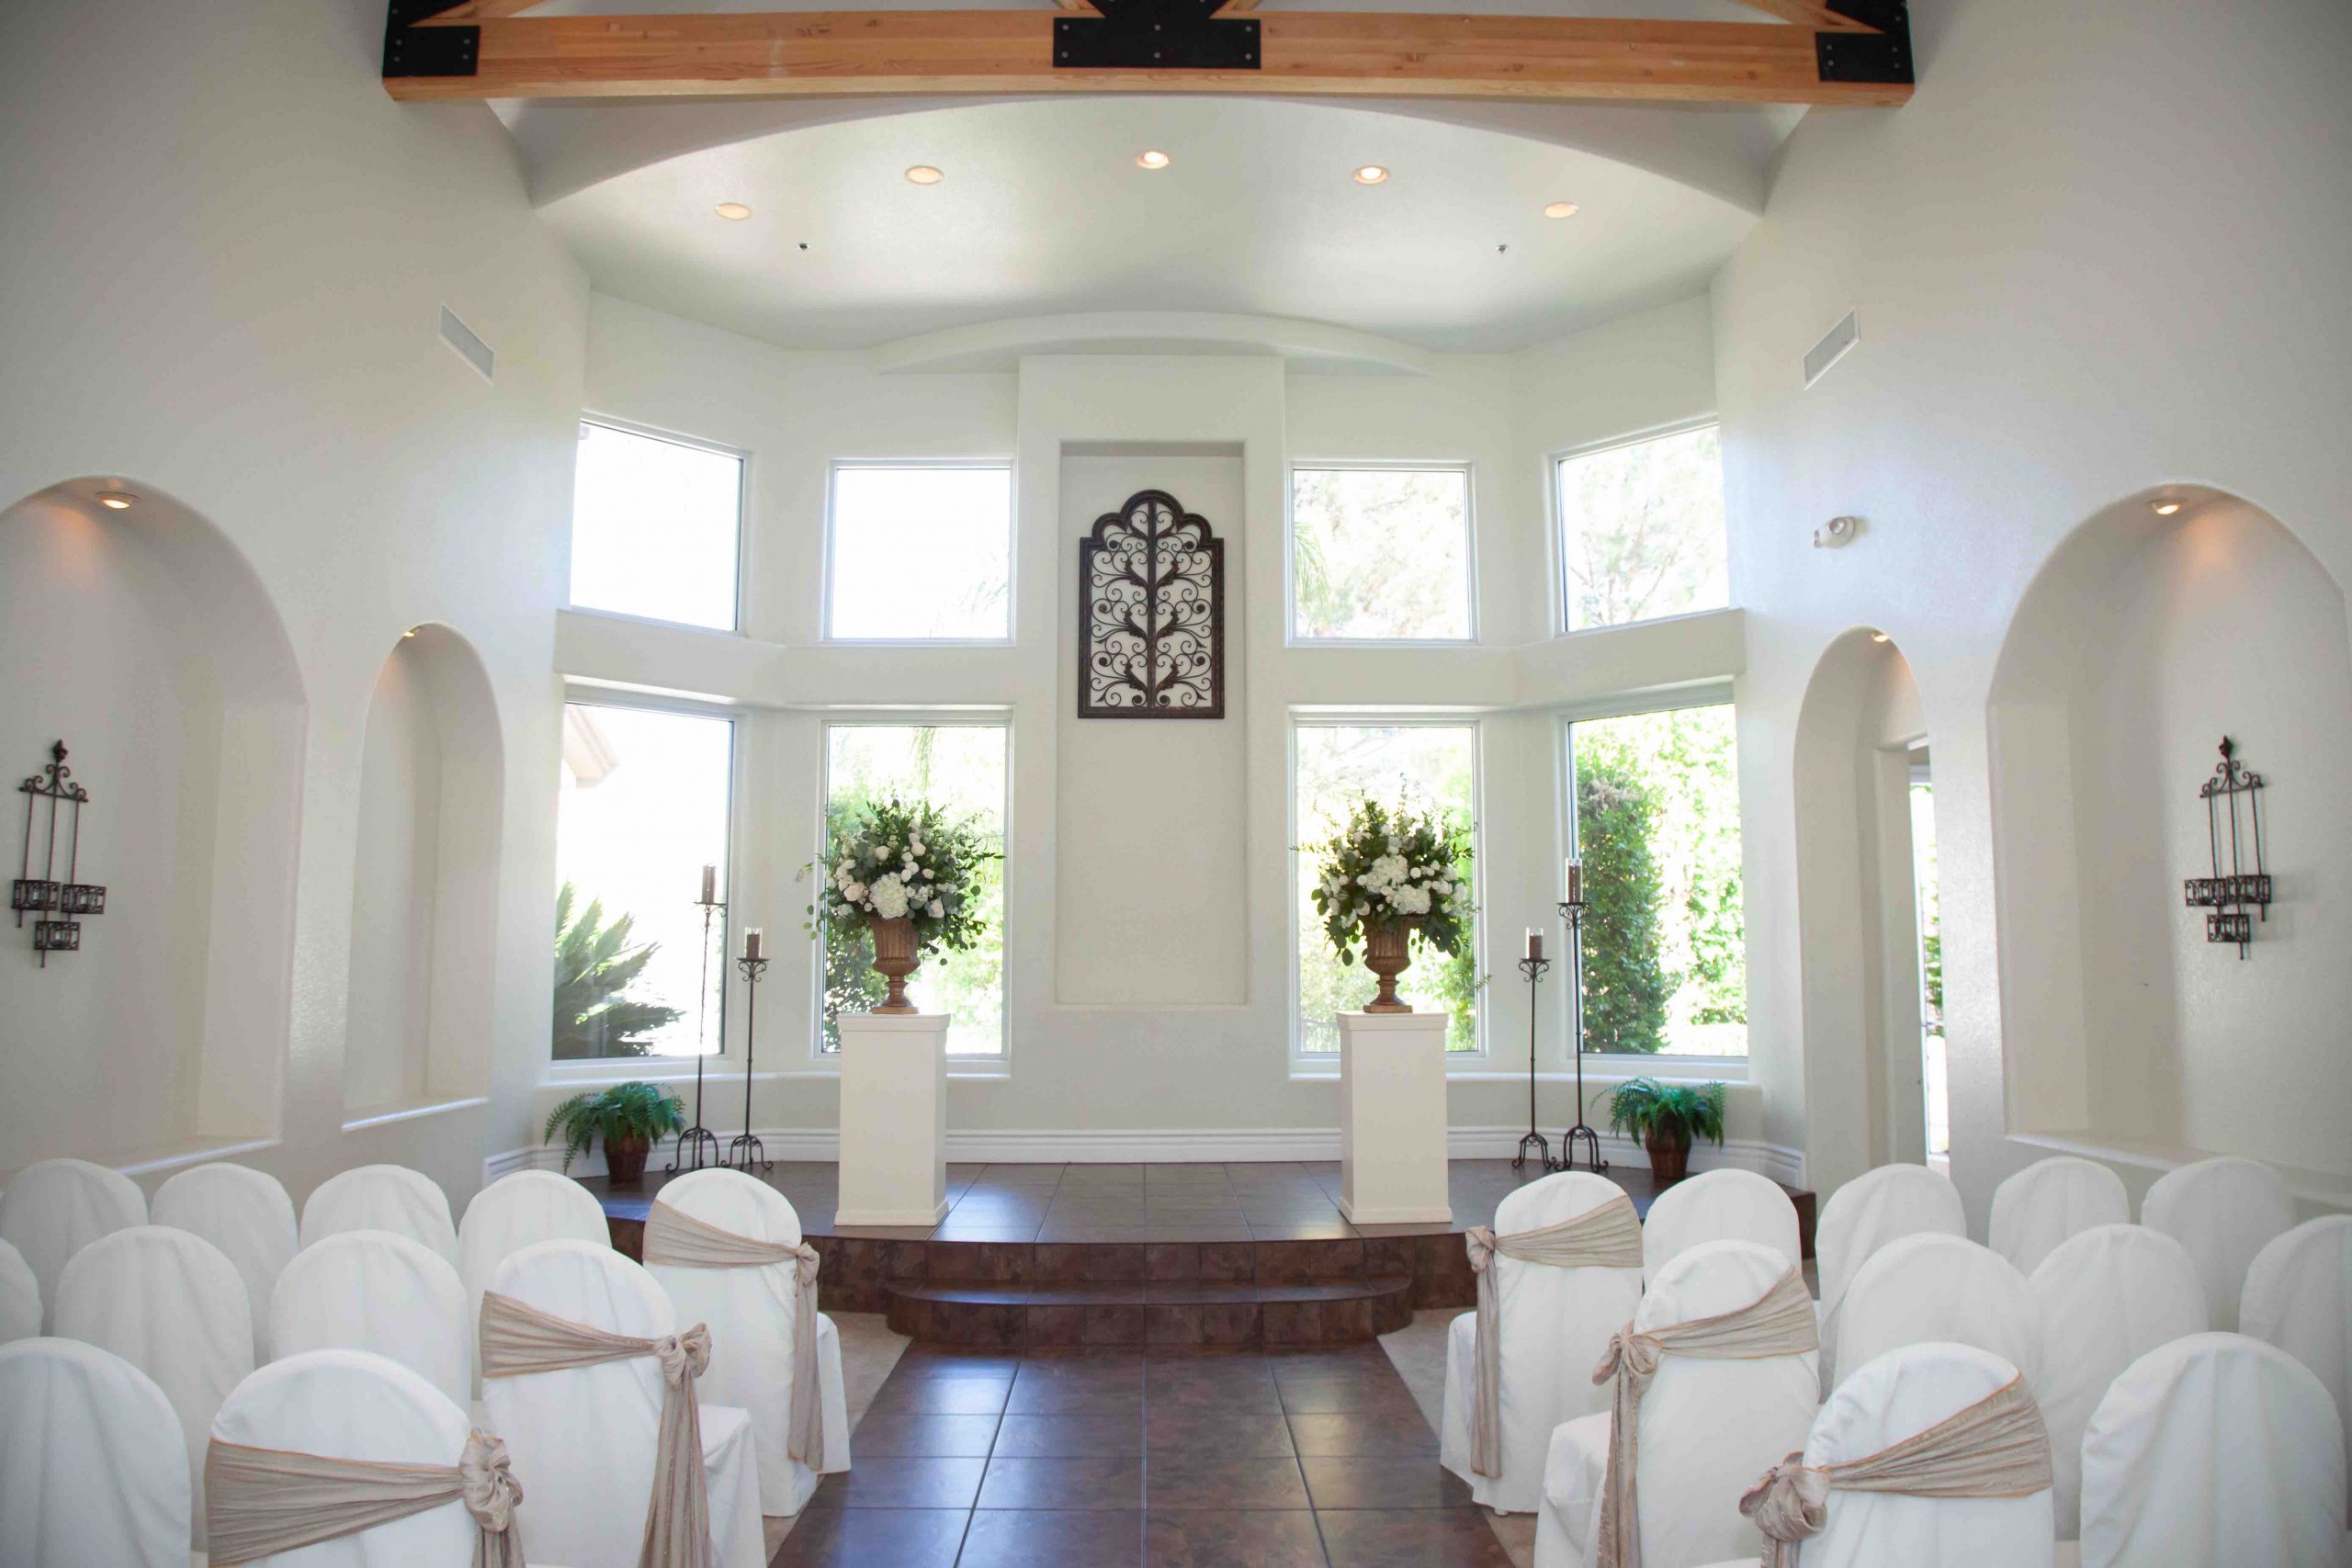 las vegas wedding chapel